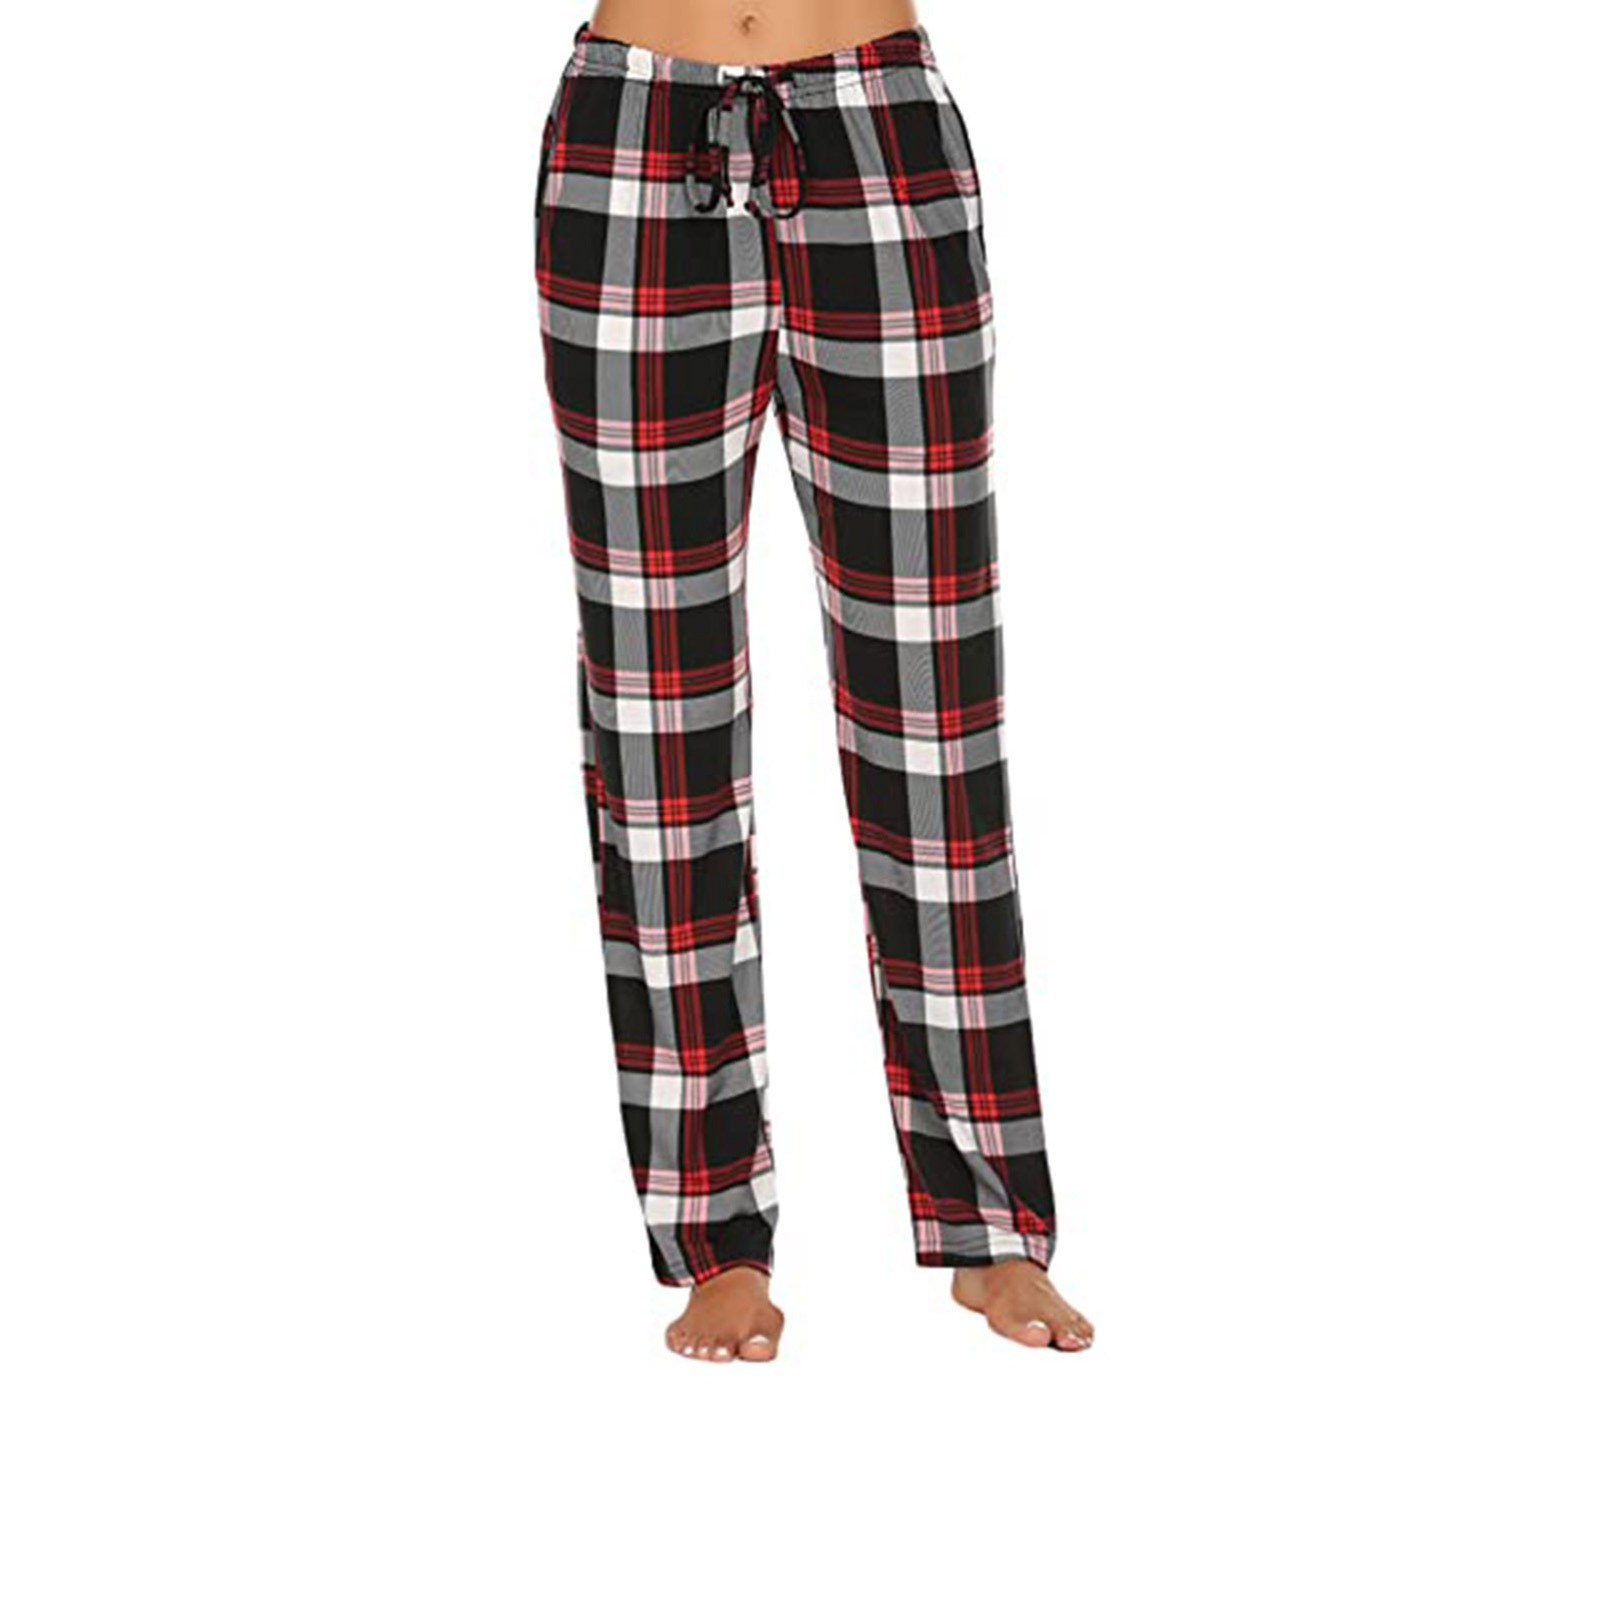 DxhmoneyHX Women Pajama Pants Plaid Buffalo Sleepwear Pajamas Pants ...